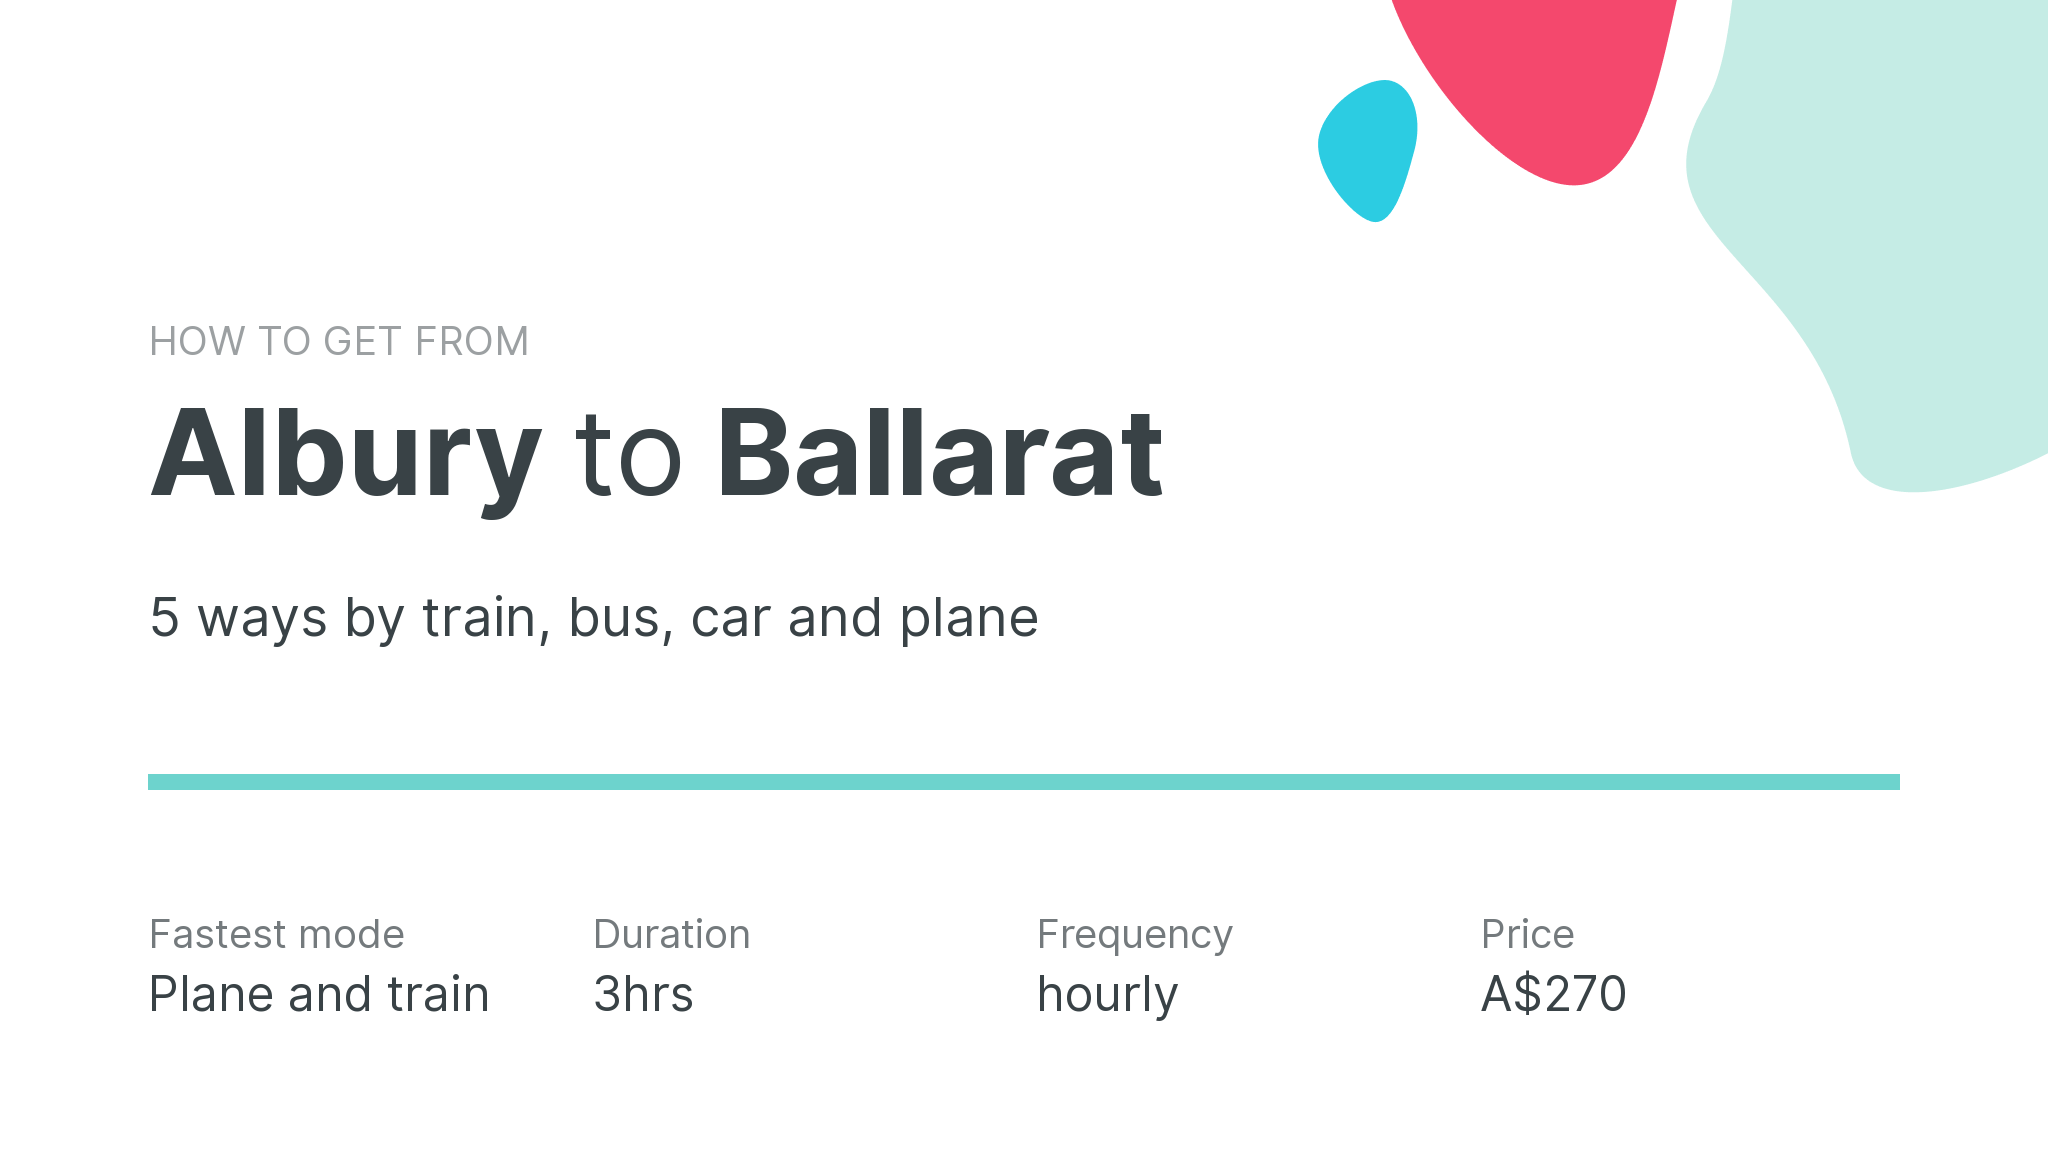 How do I get from Albury to Ballarat